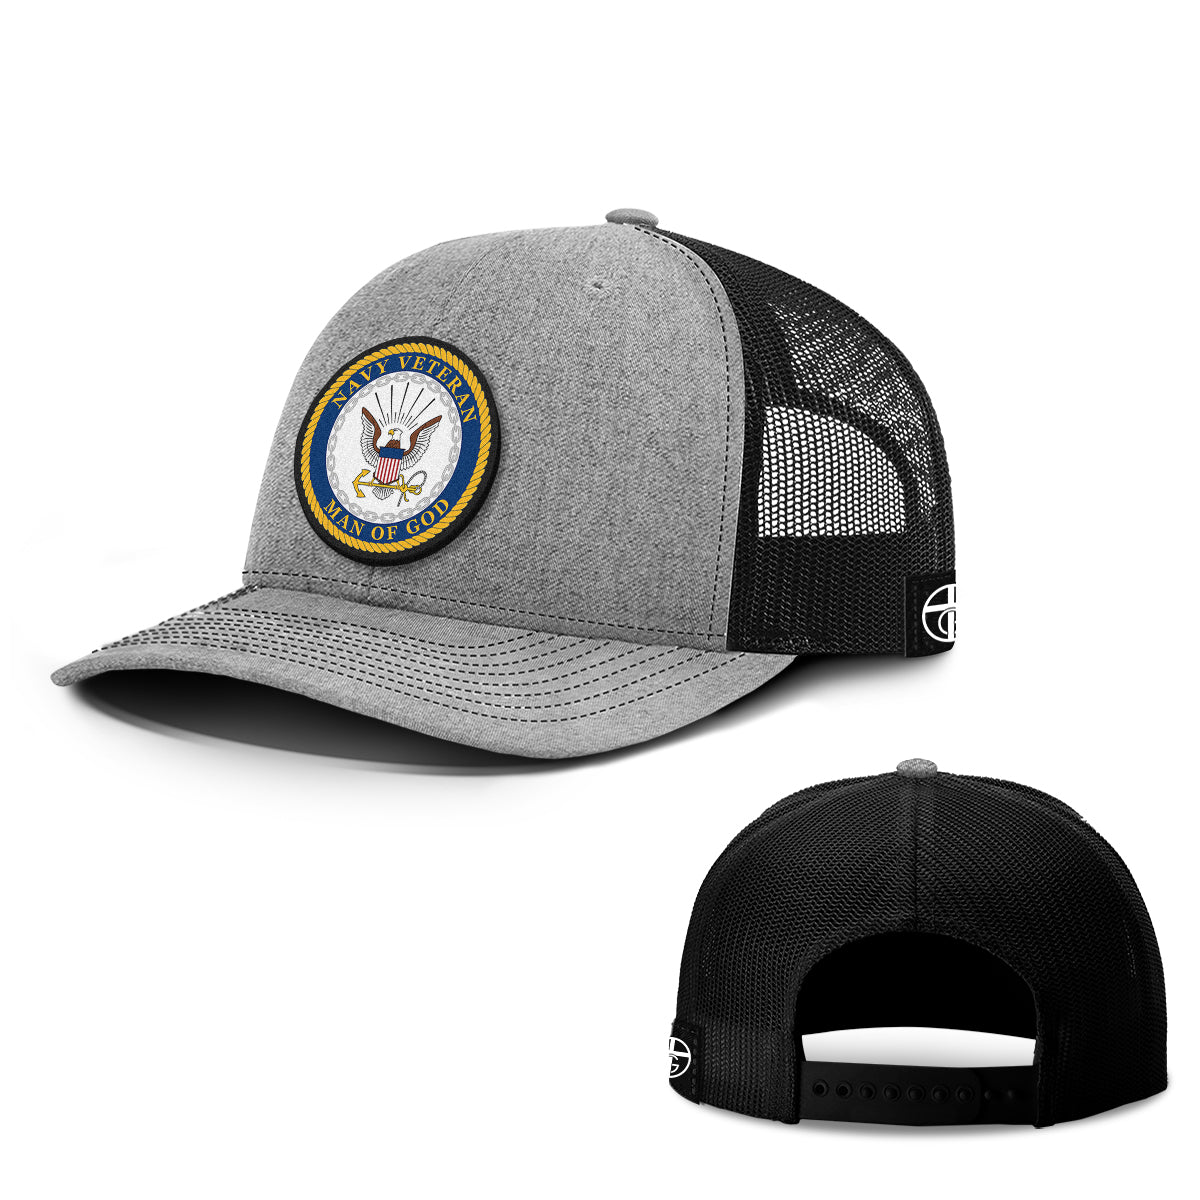 Navy Veteran -Man Of God Patch Hats